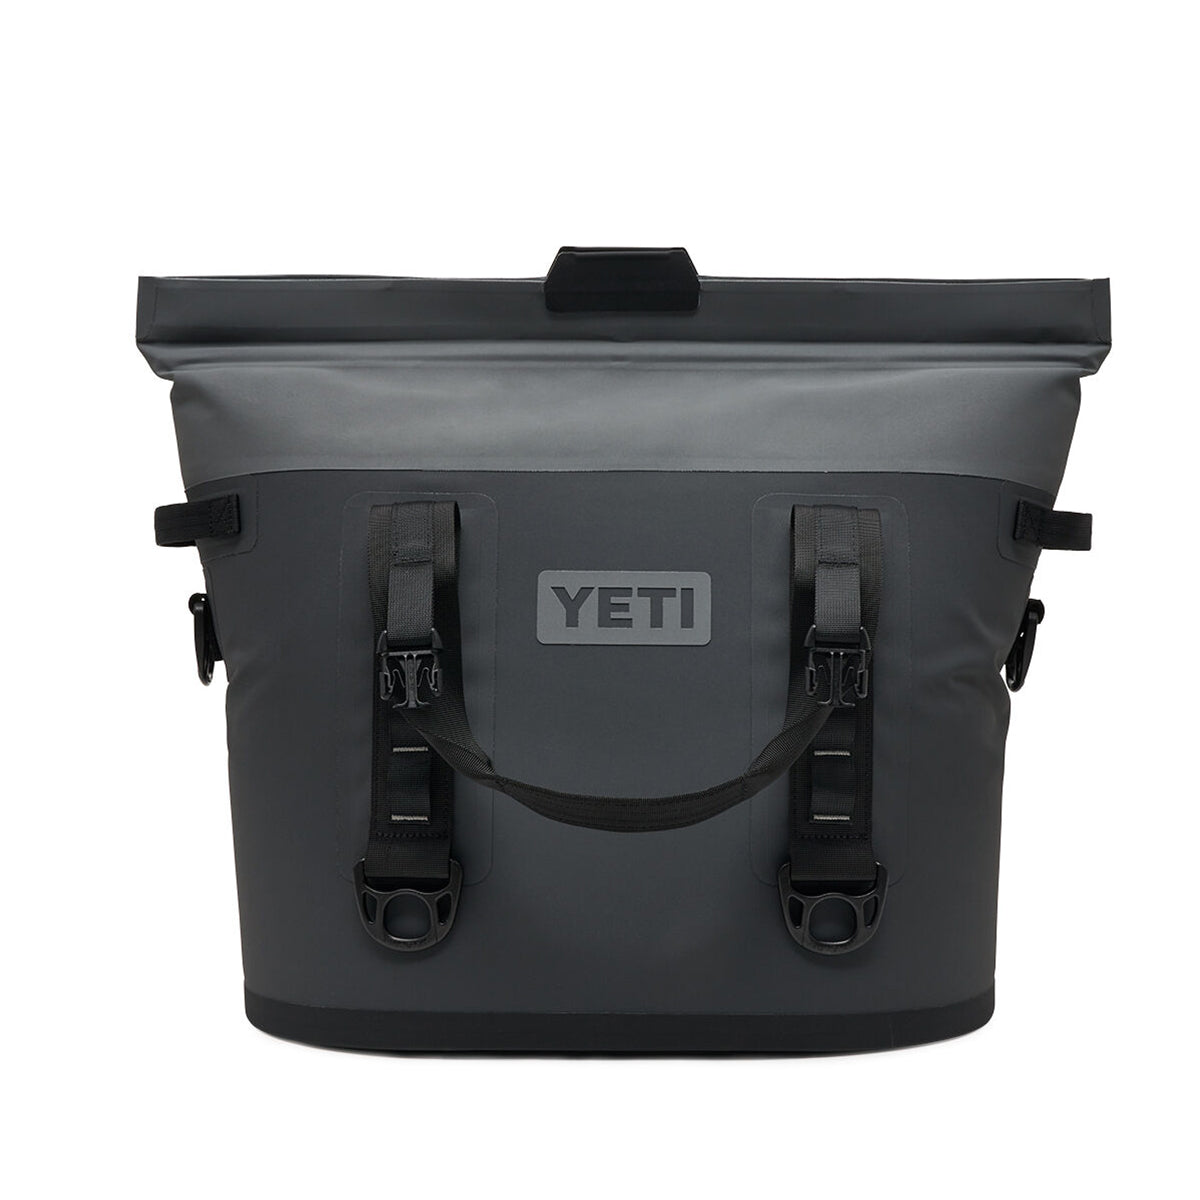 Yeti Hopper M30 Soft Cooler by YETI | Camping - goHUNT Shop